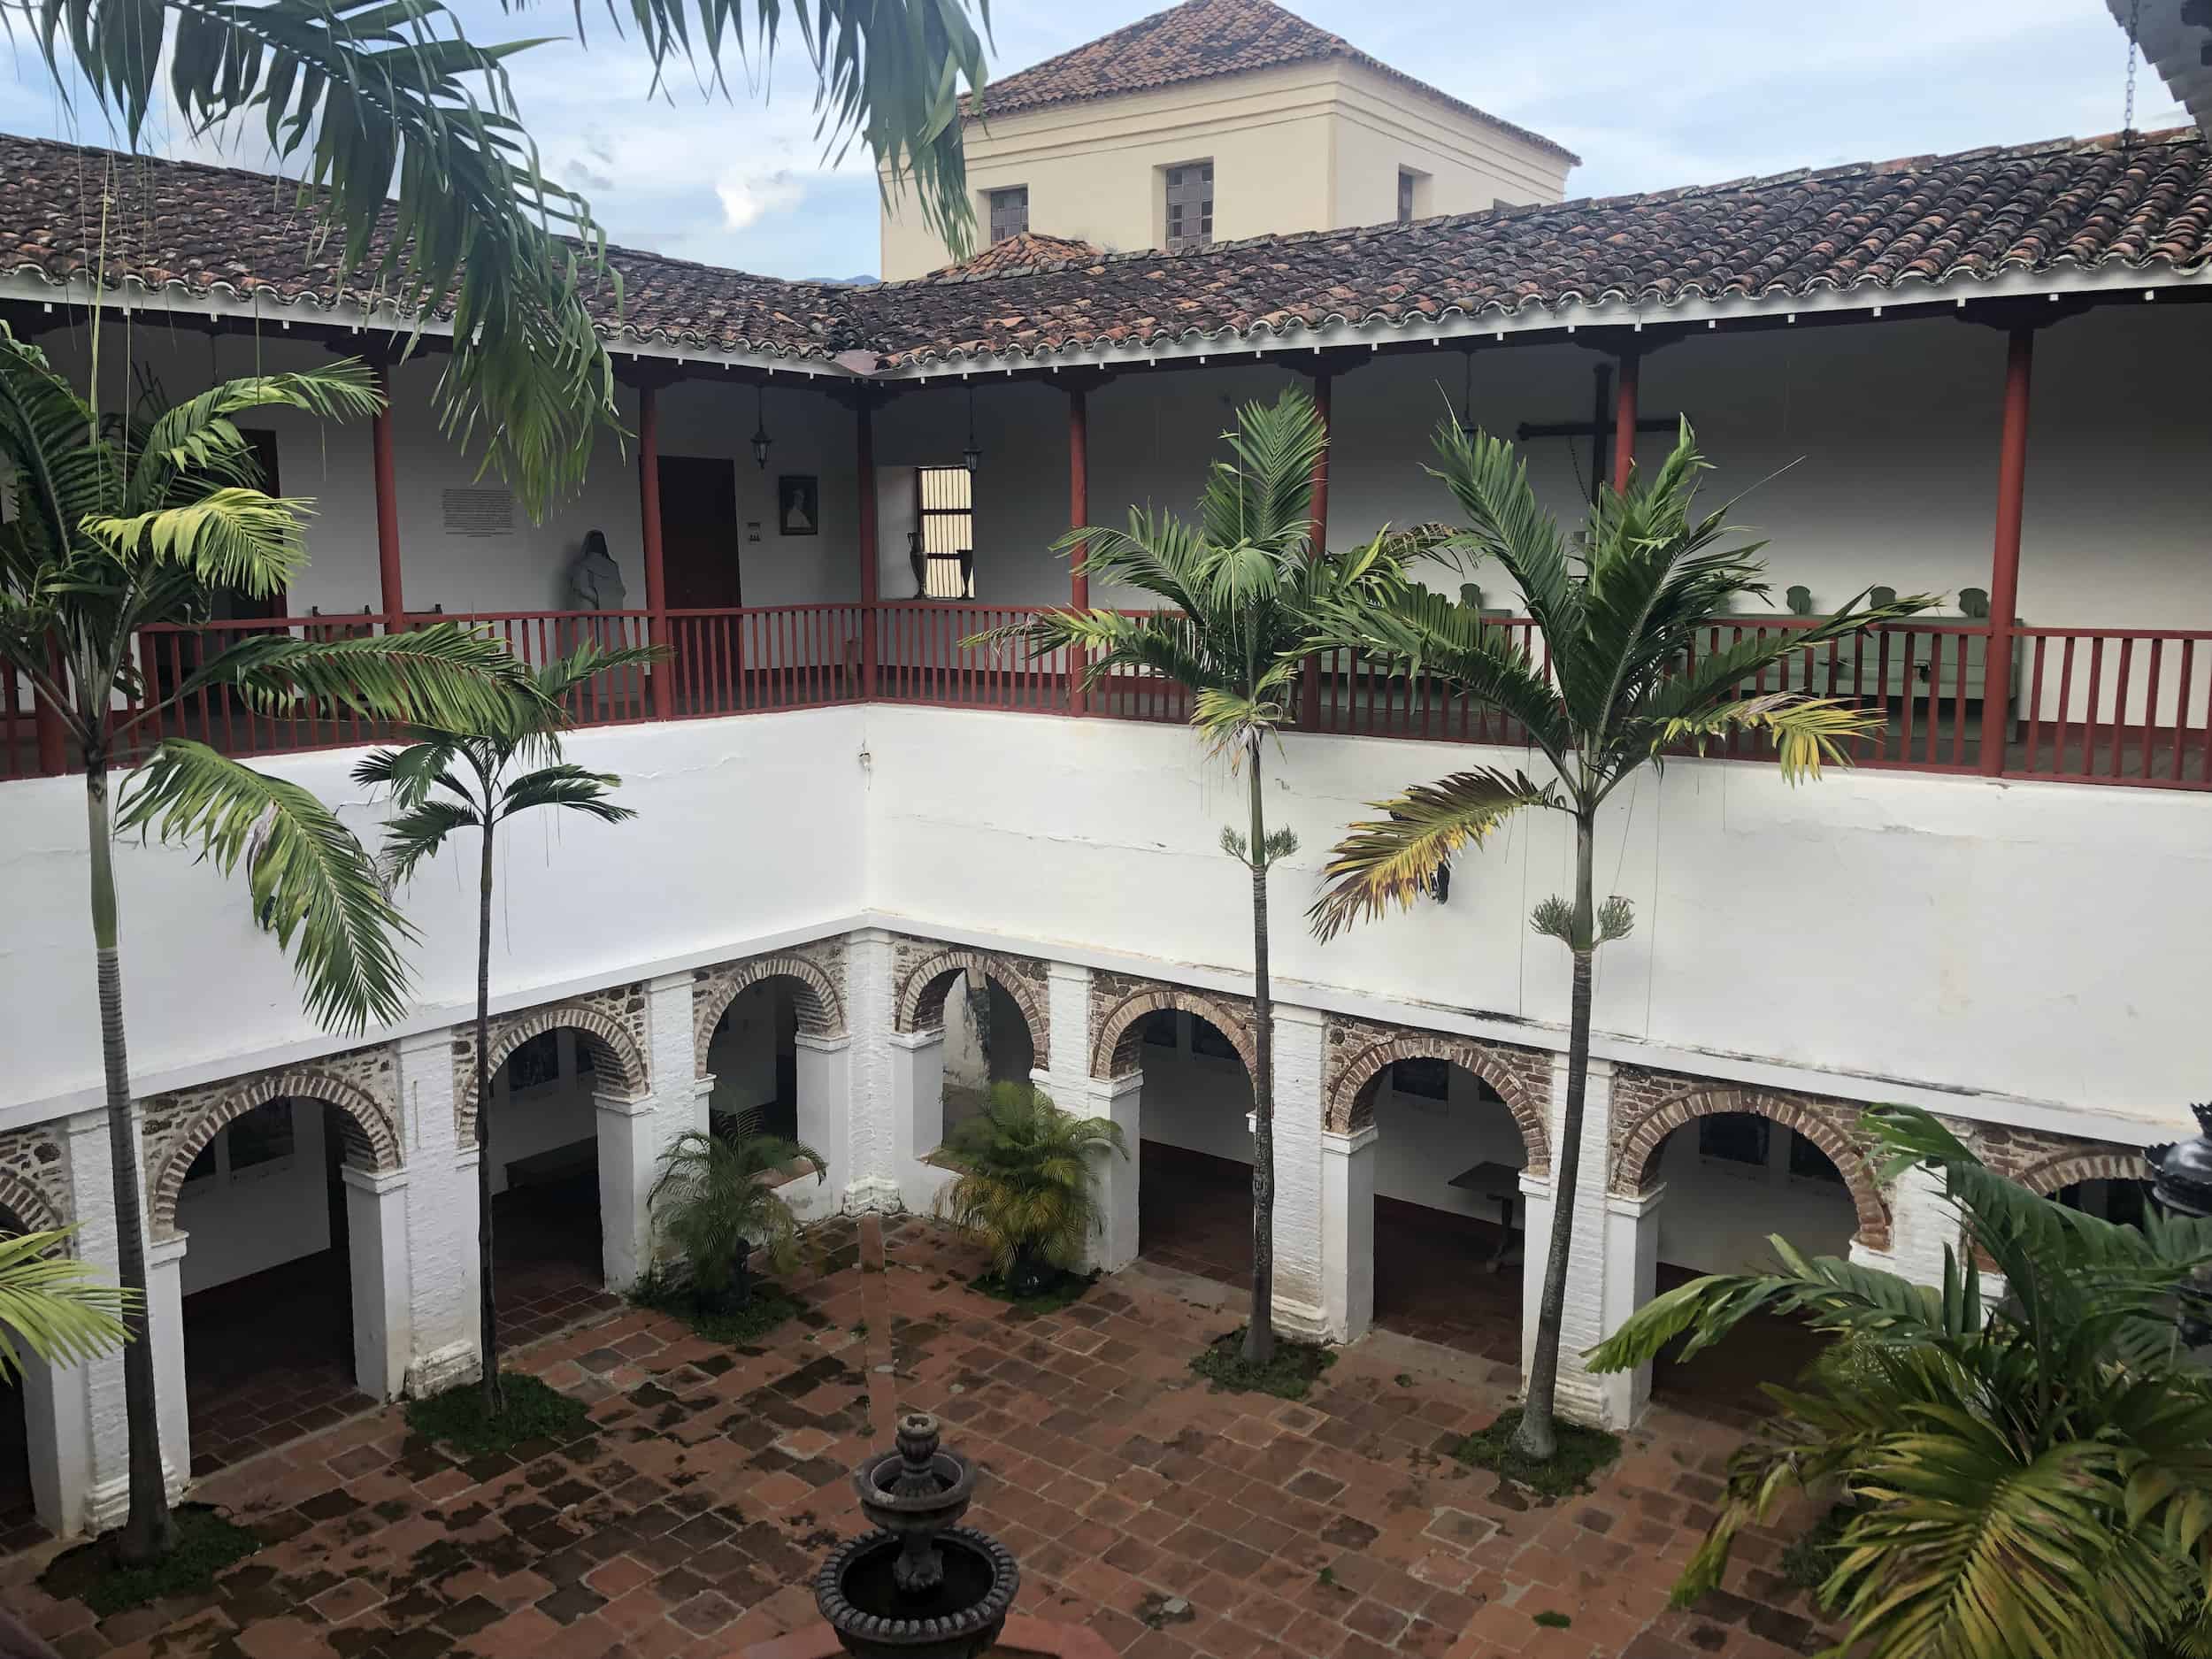 Courtyard at the Francisco Cristóbal Toro Museum of Religious Art in Santa Fe de Antioquia, Colombia